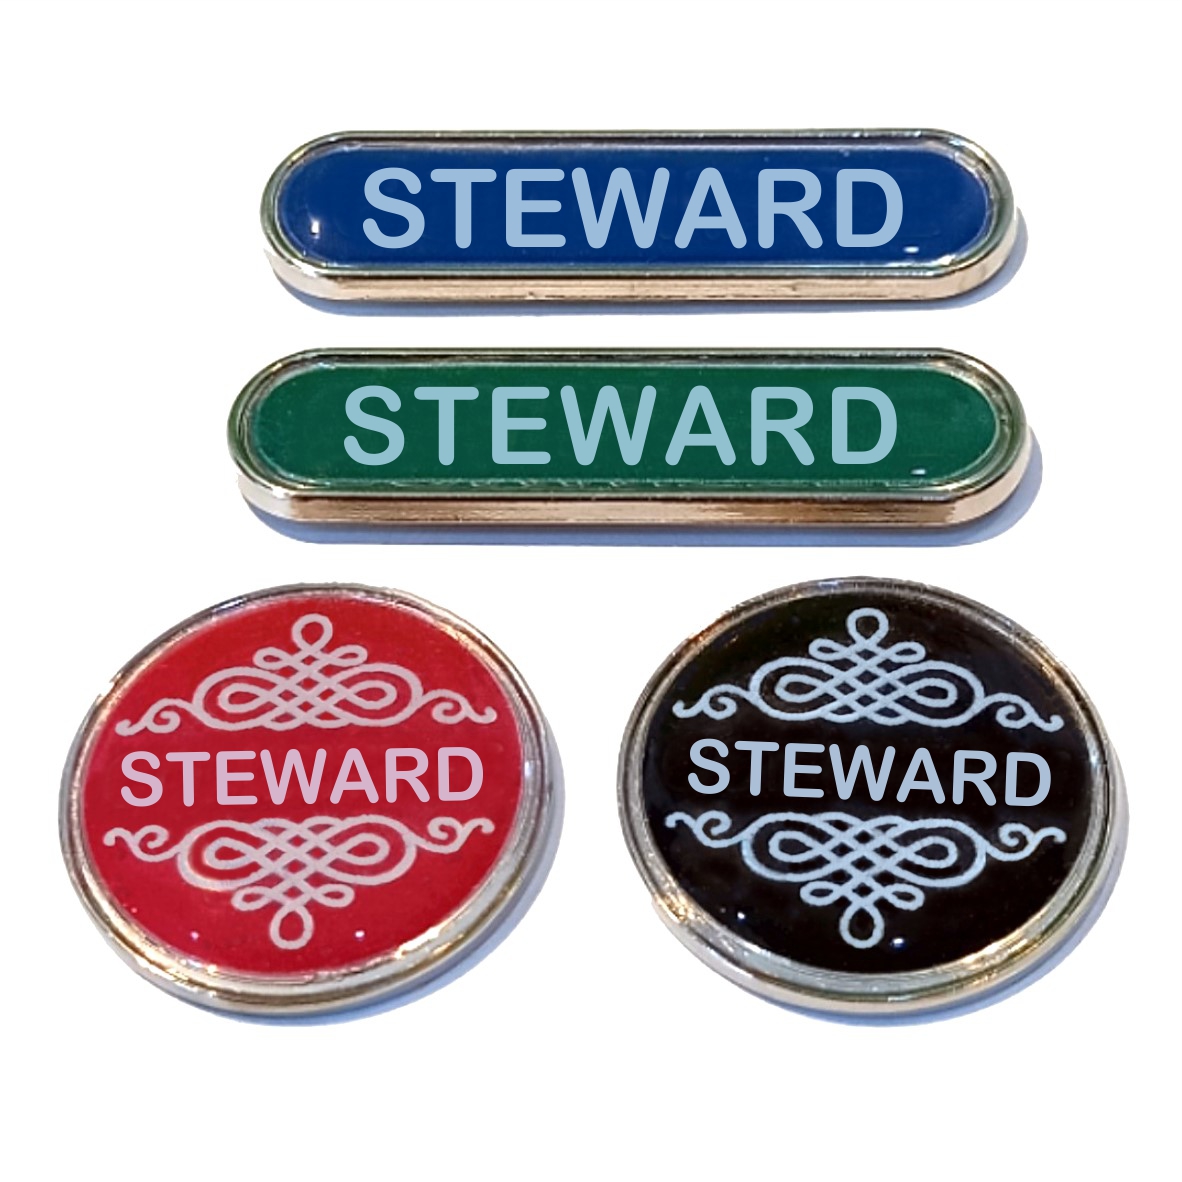 STEWARD badge